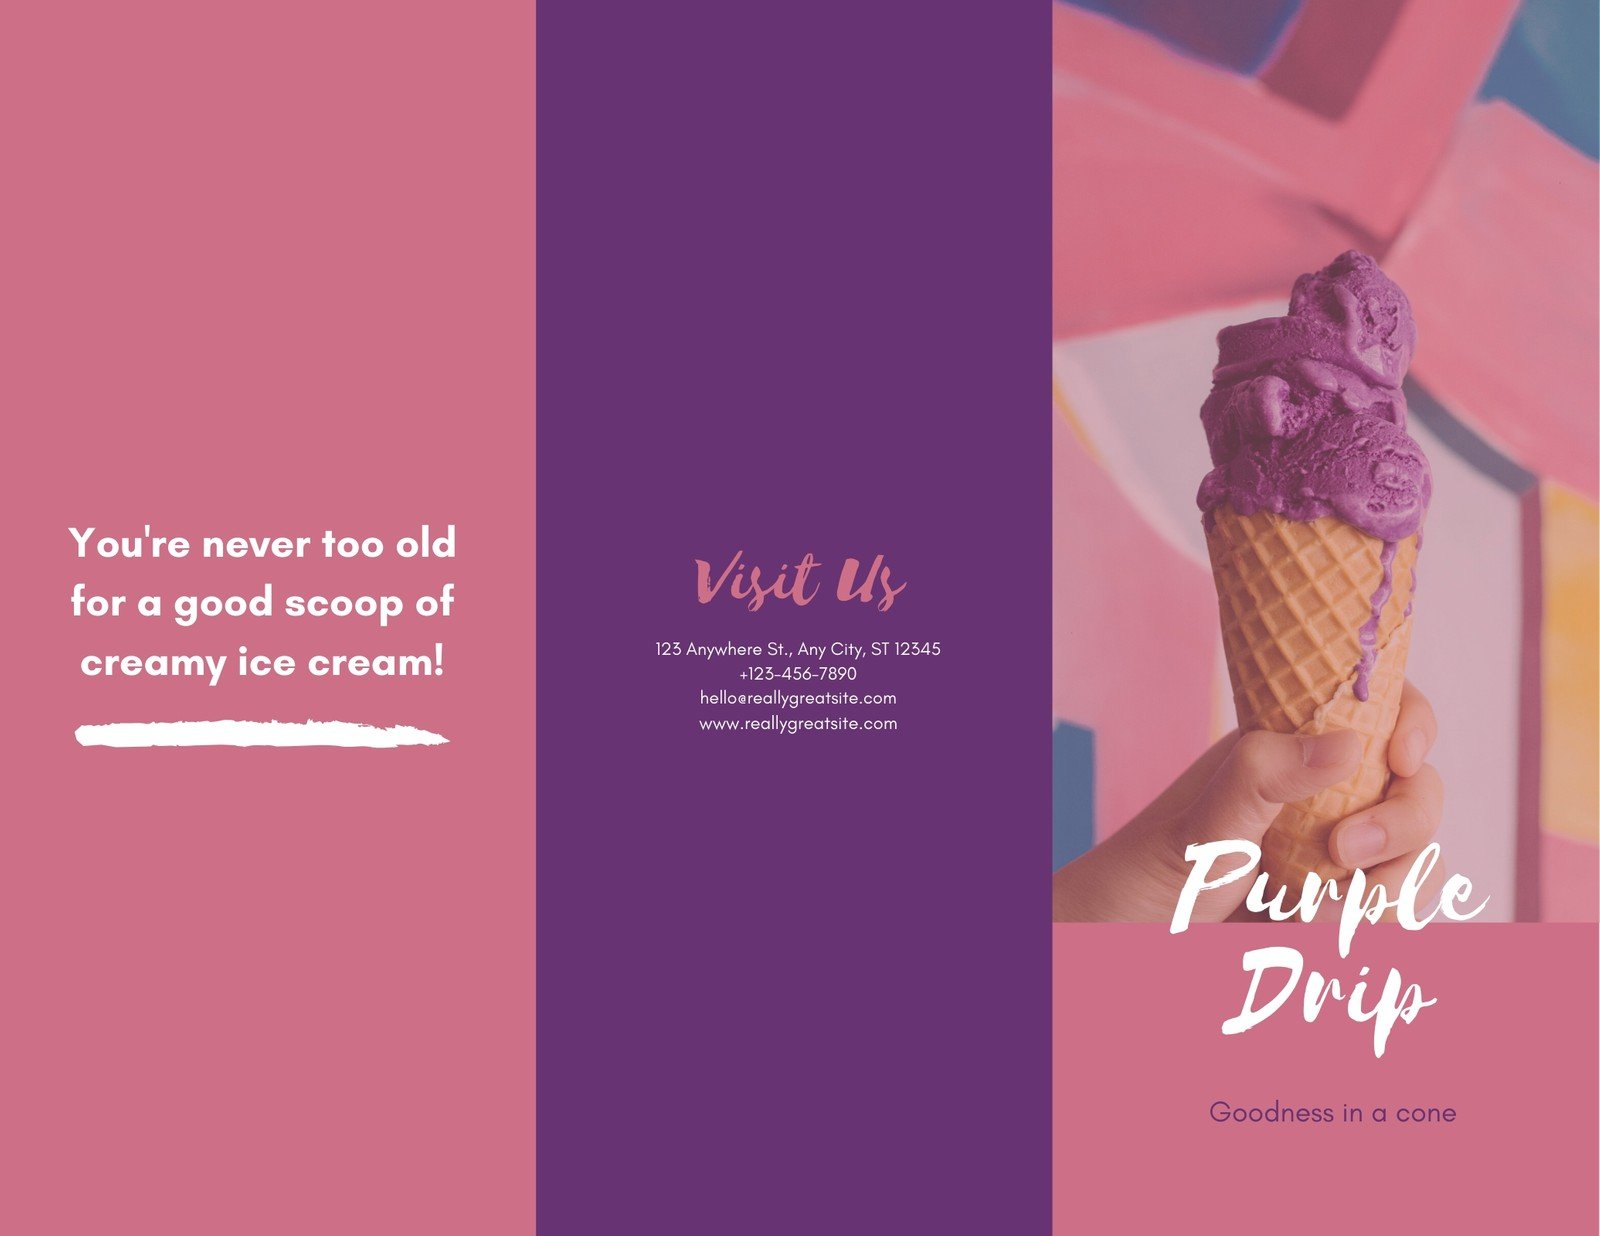 ice cream parlour business plan pdf